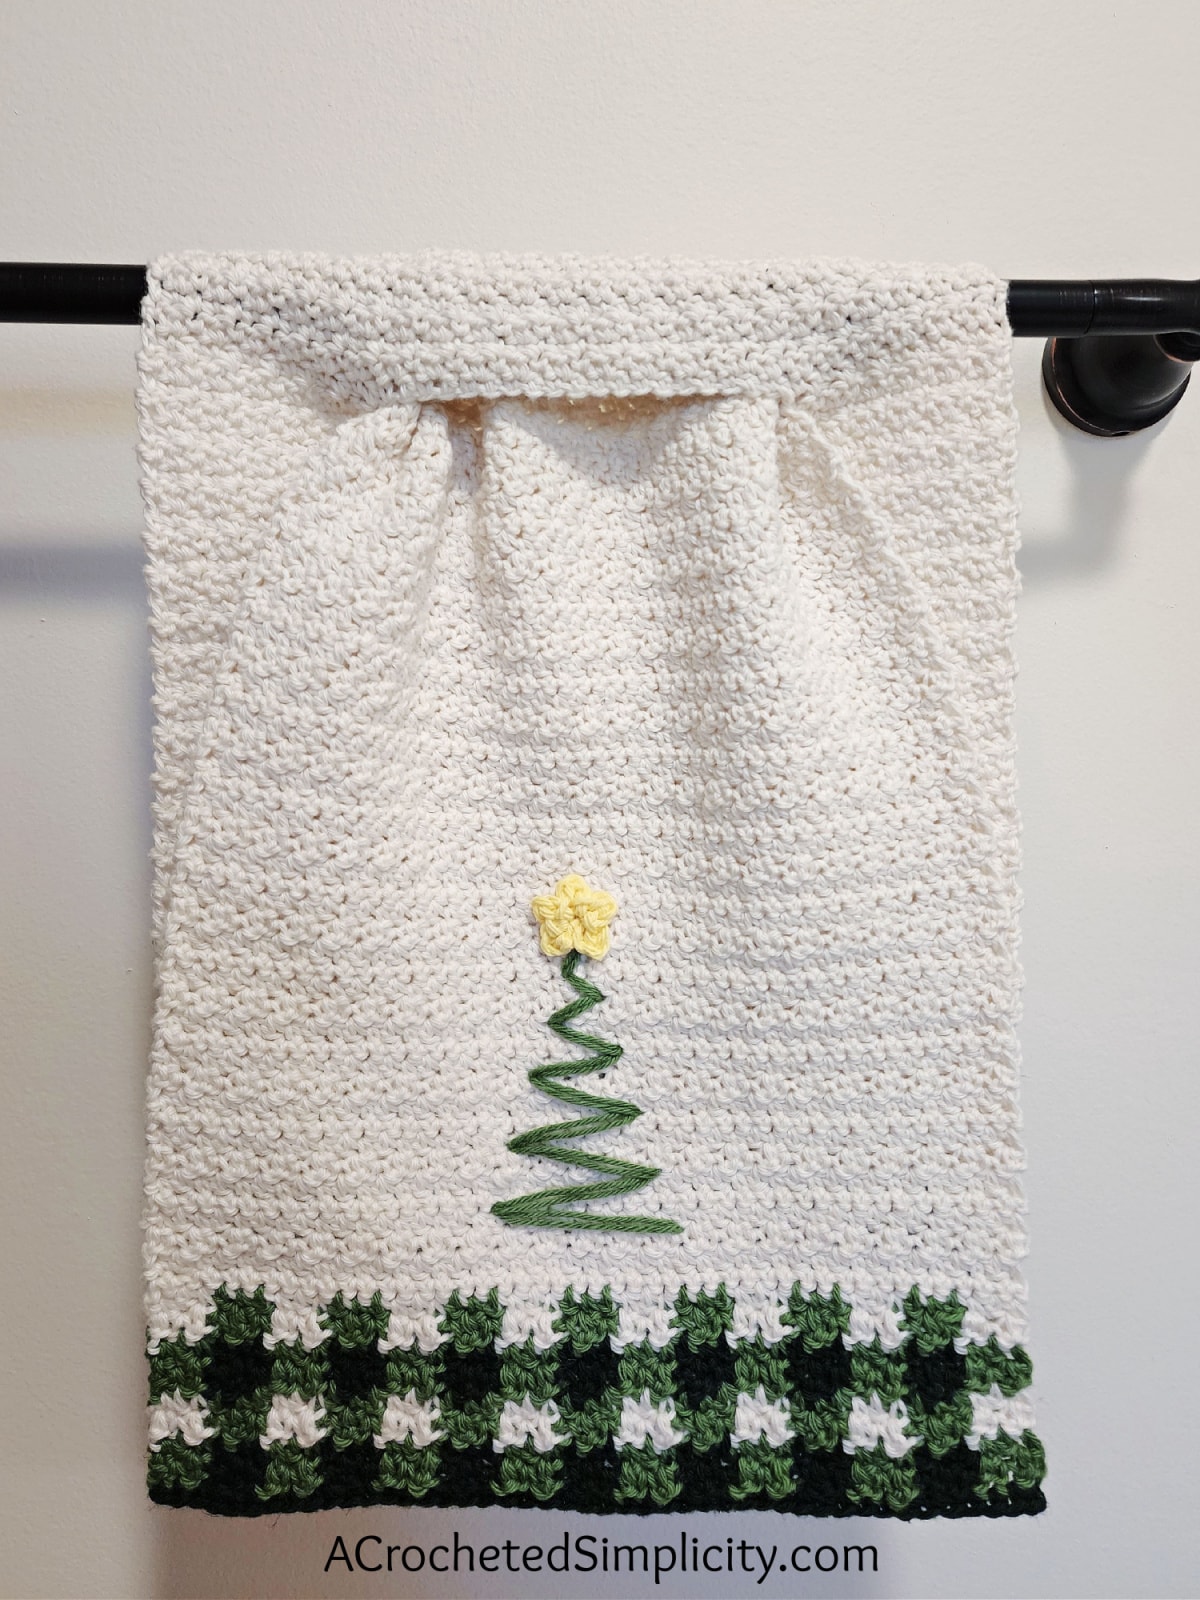 Christmas Kitchen Towels Buffalo Check Plaid Dish Towels Winter